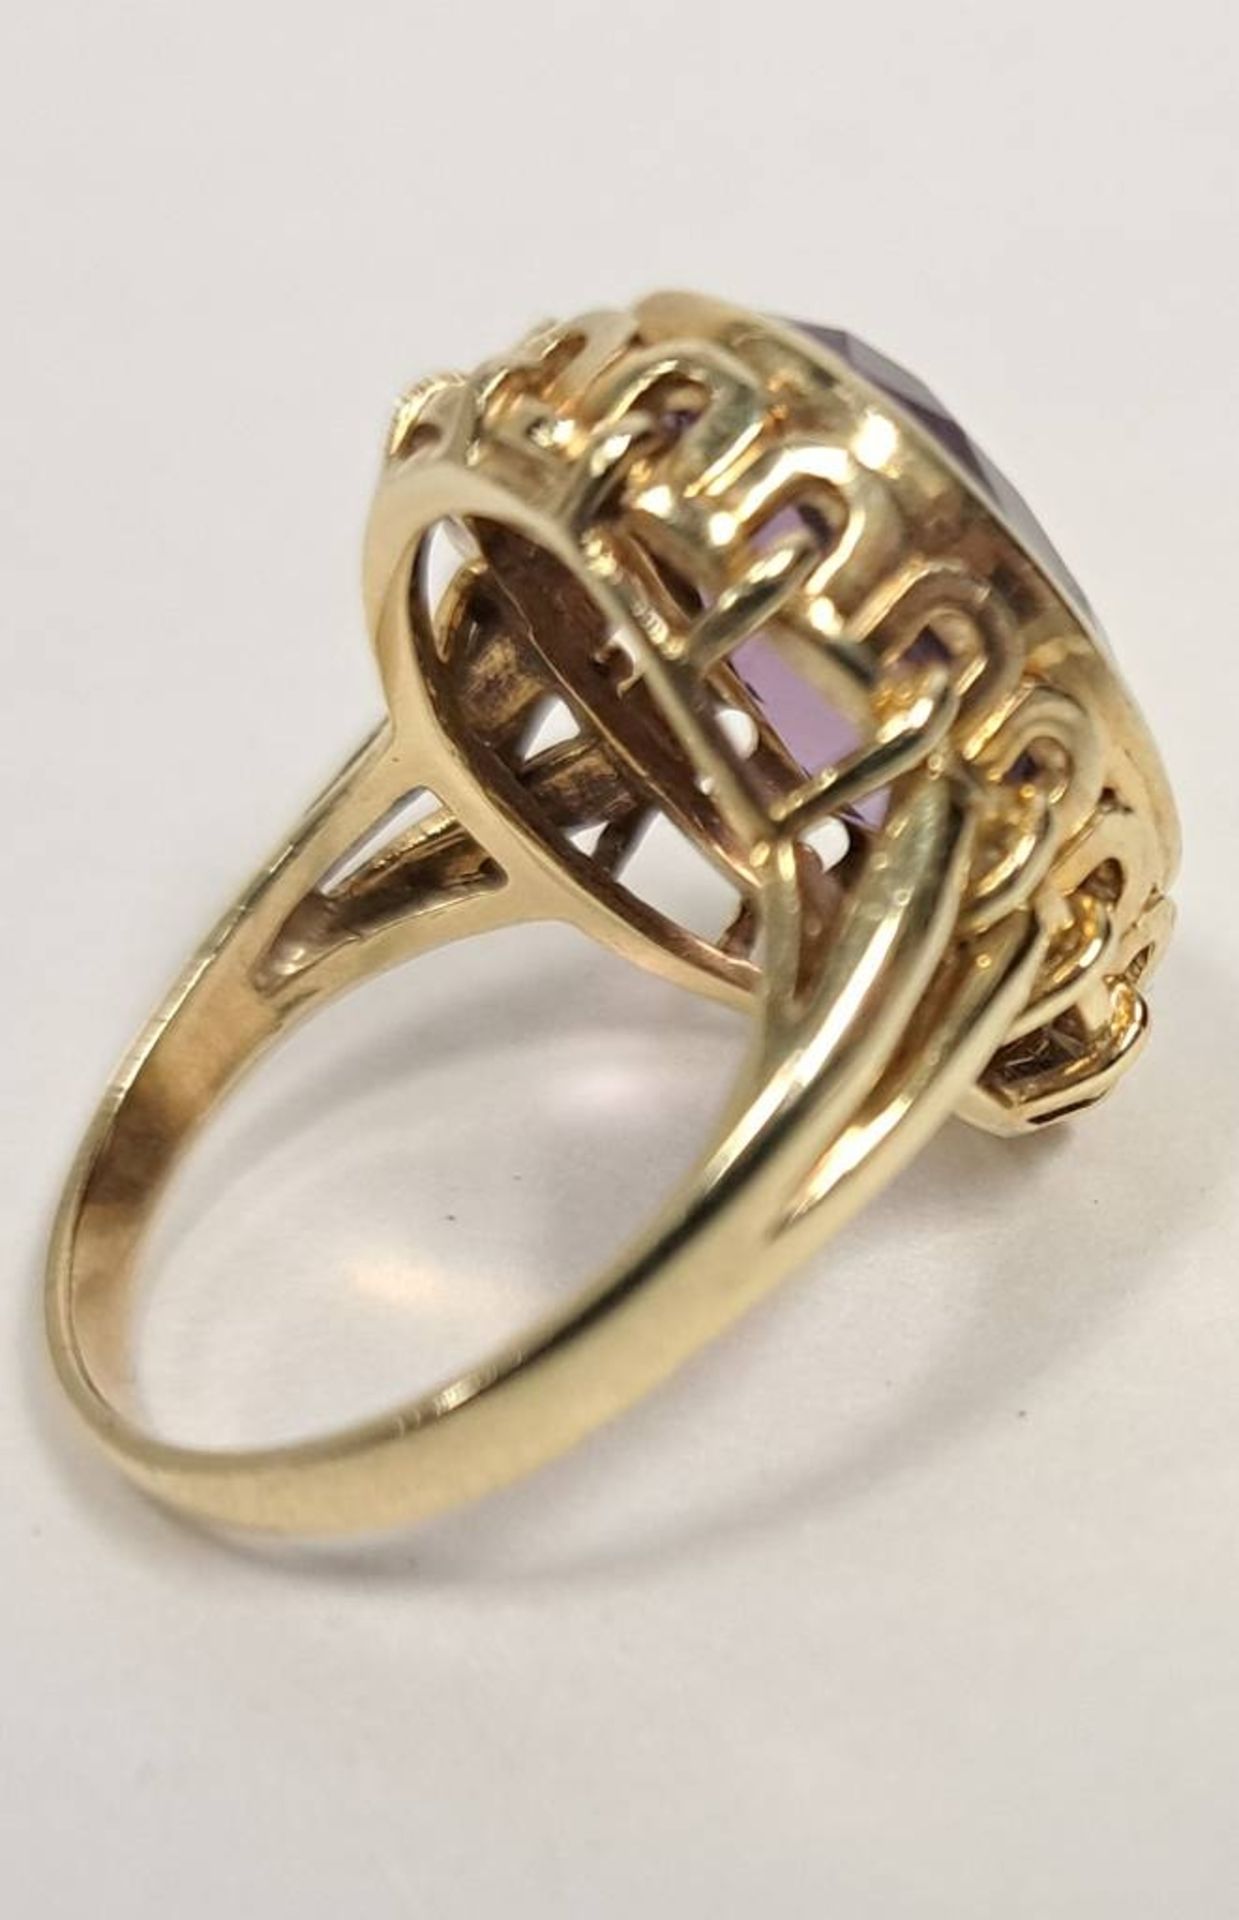 Vintage 585 GG Gold Ring + Amethyst - Image 4 of 4